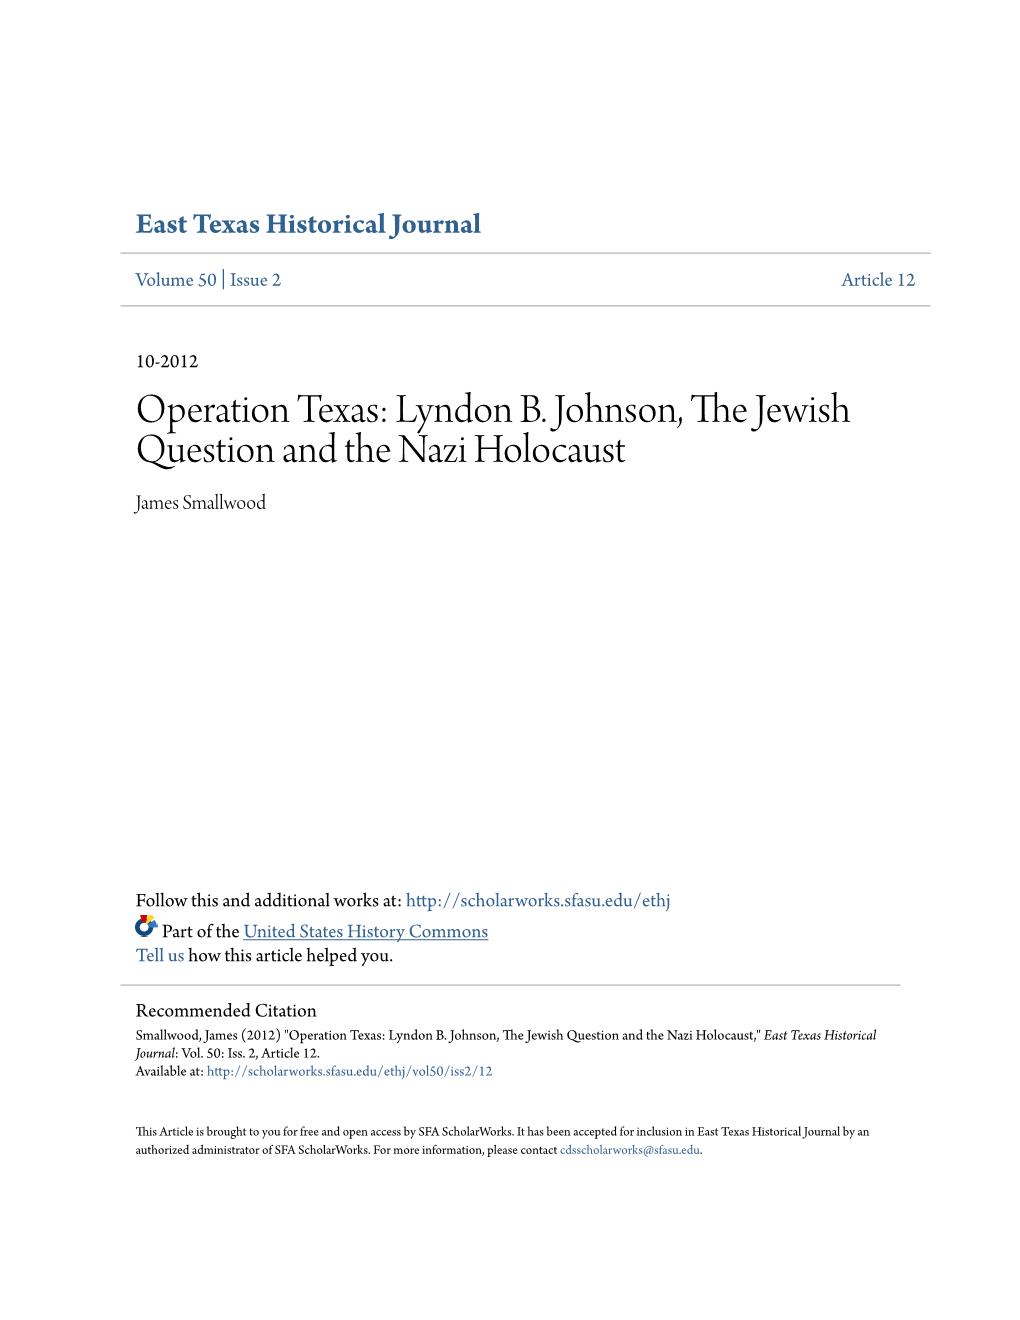 Operation Texas: Lyndon B. Johnson, the Jewish Question and the Nazi Holocaust